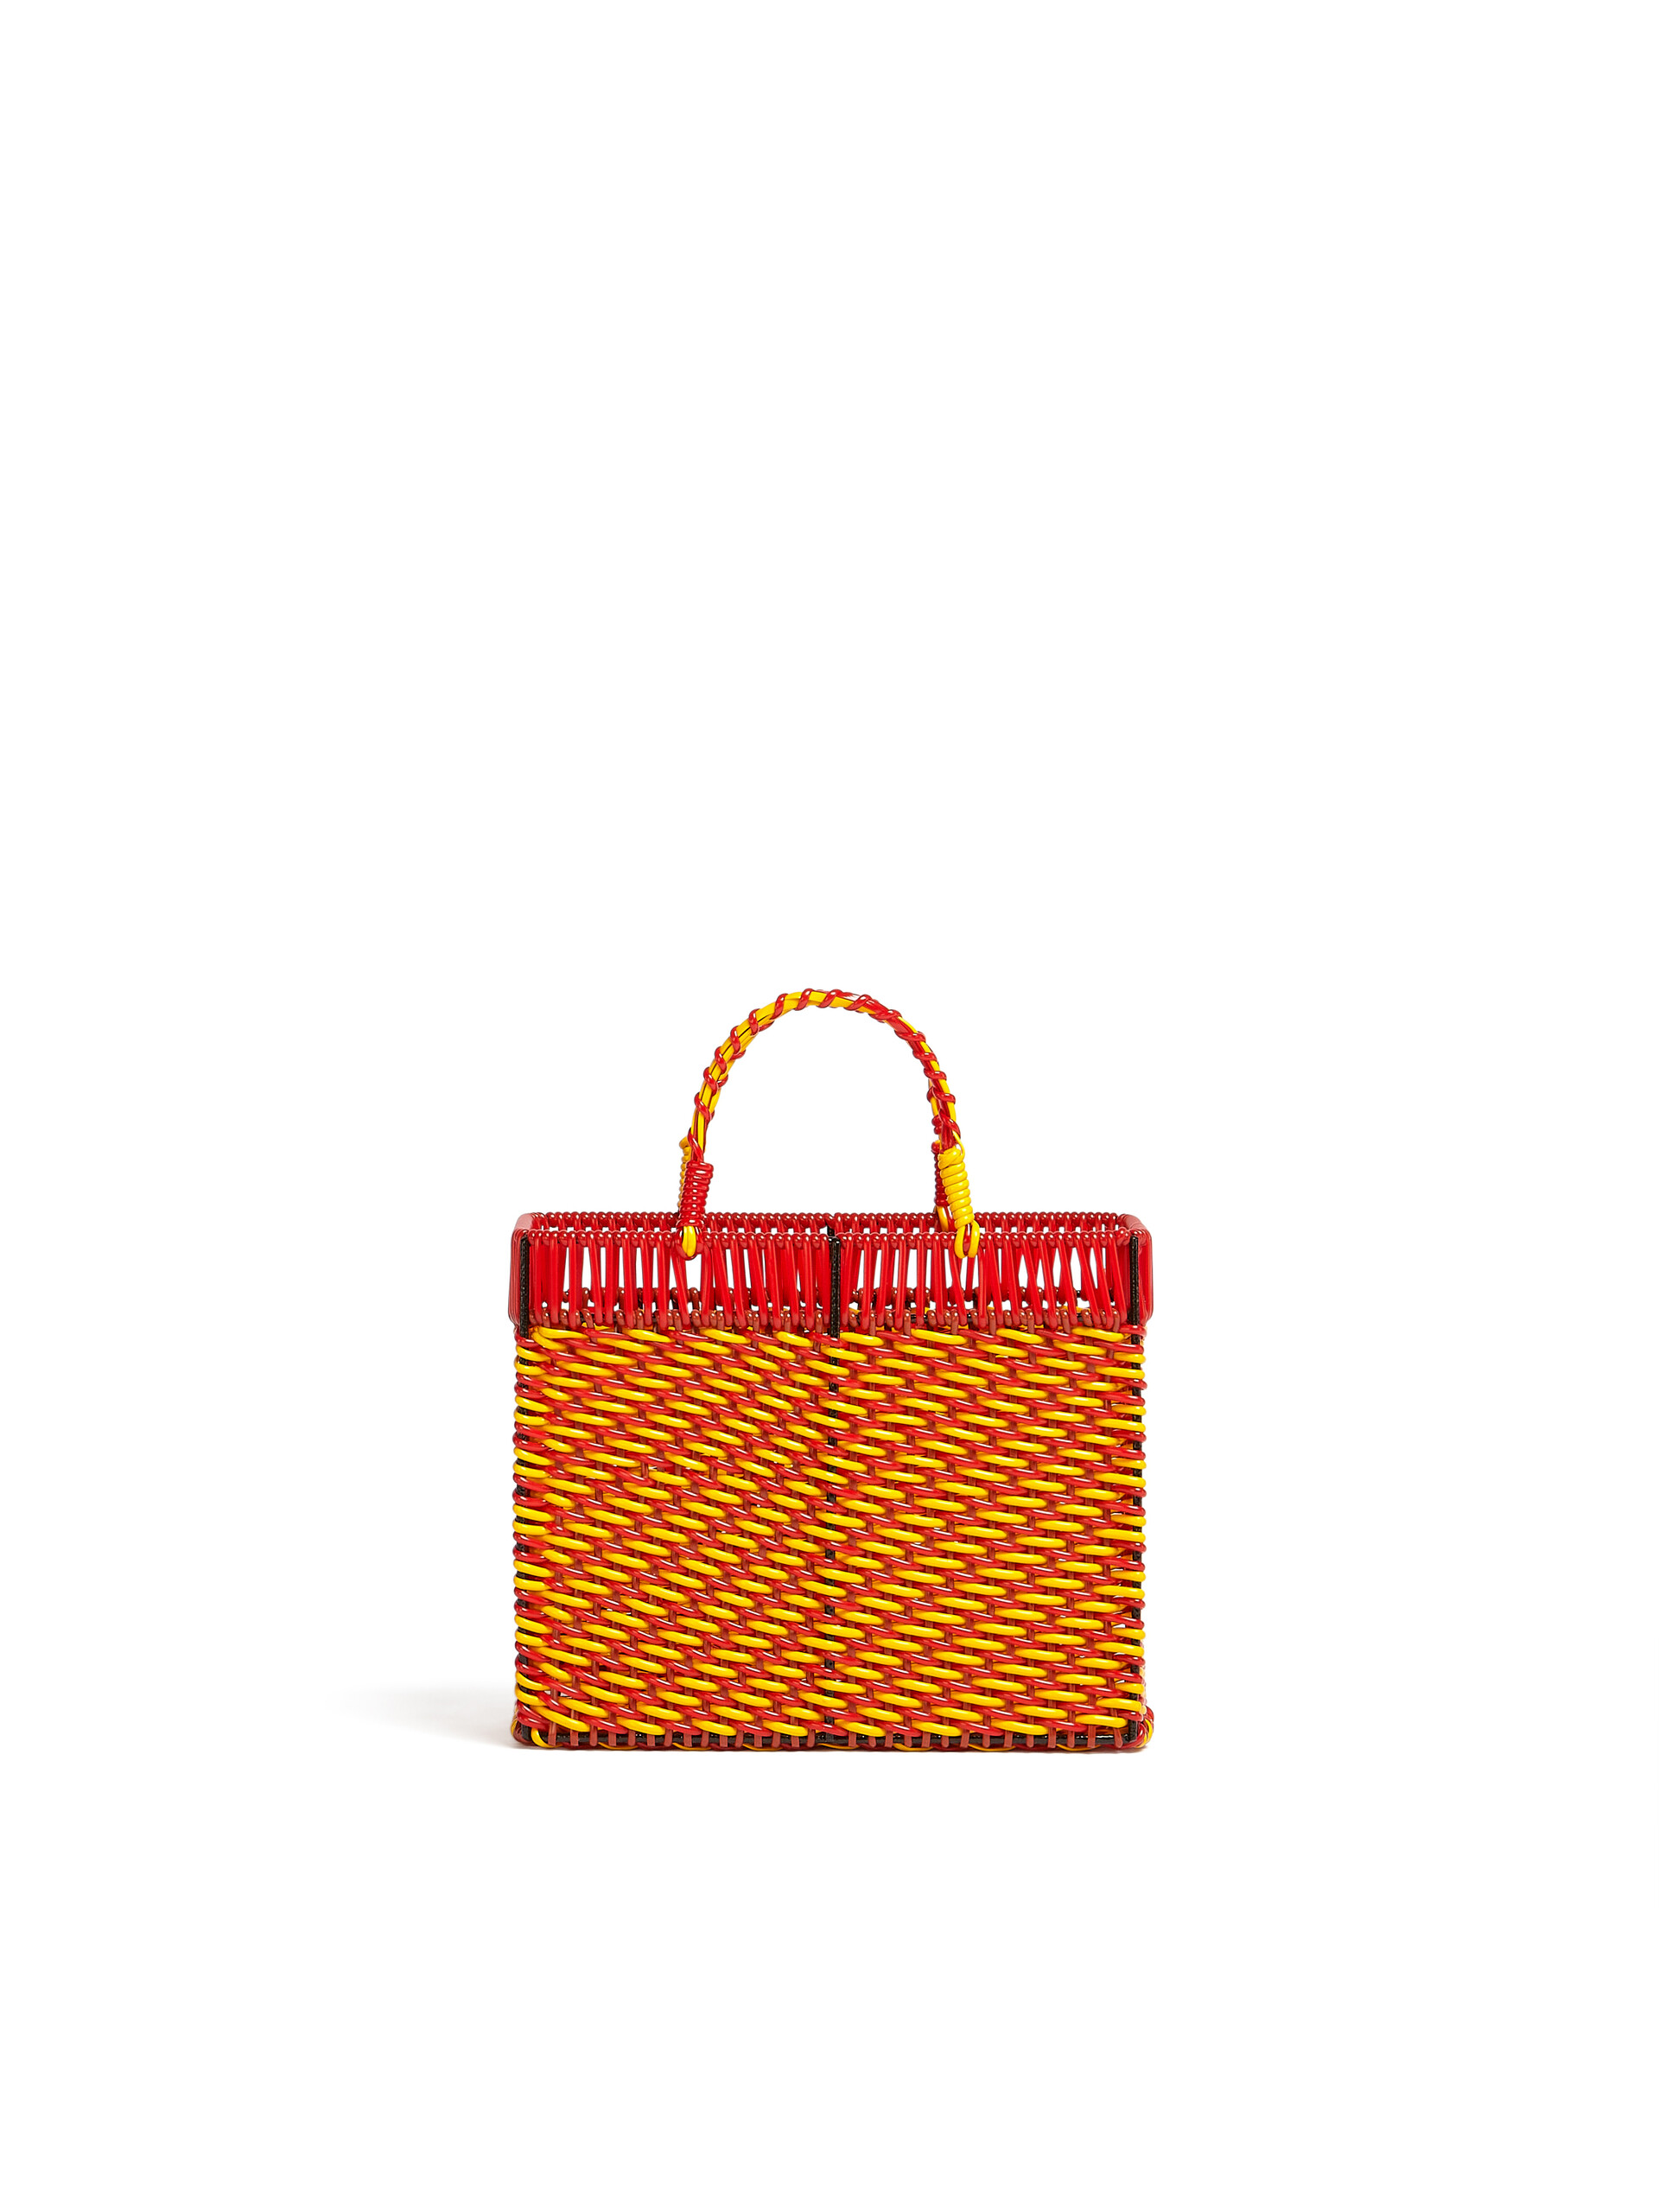 MARNI MARKET Korb in Orange und Rot - Accessoires - Image 3